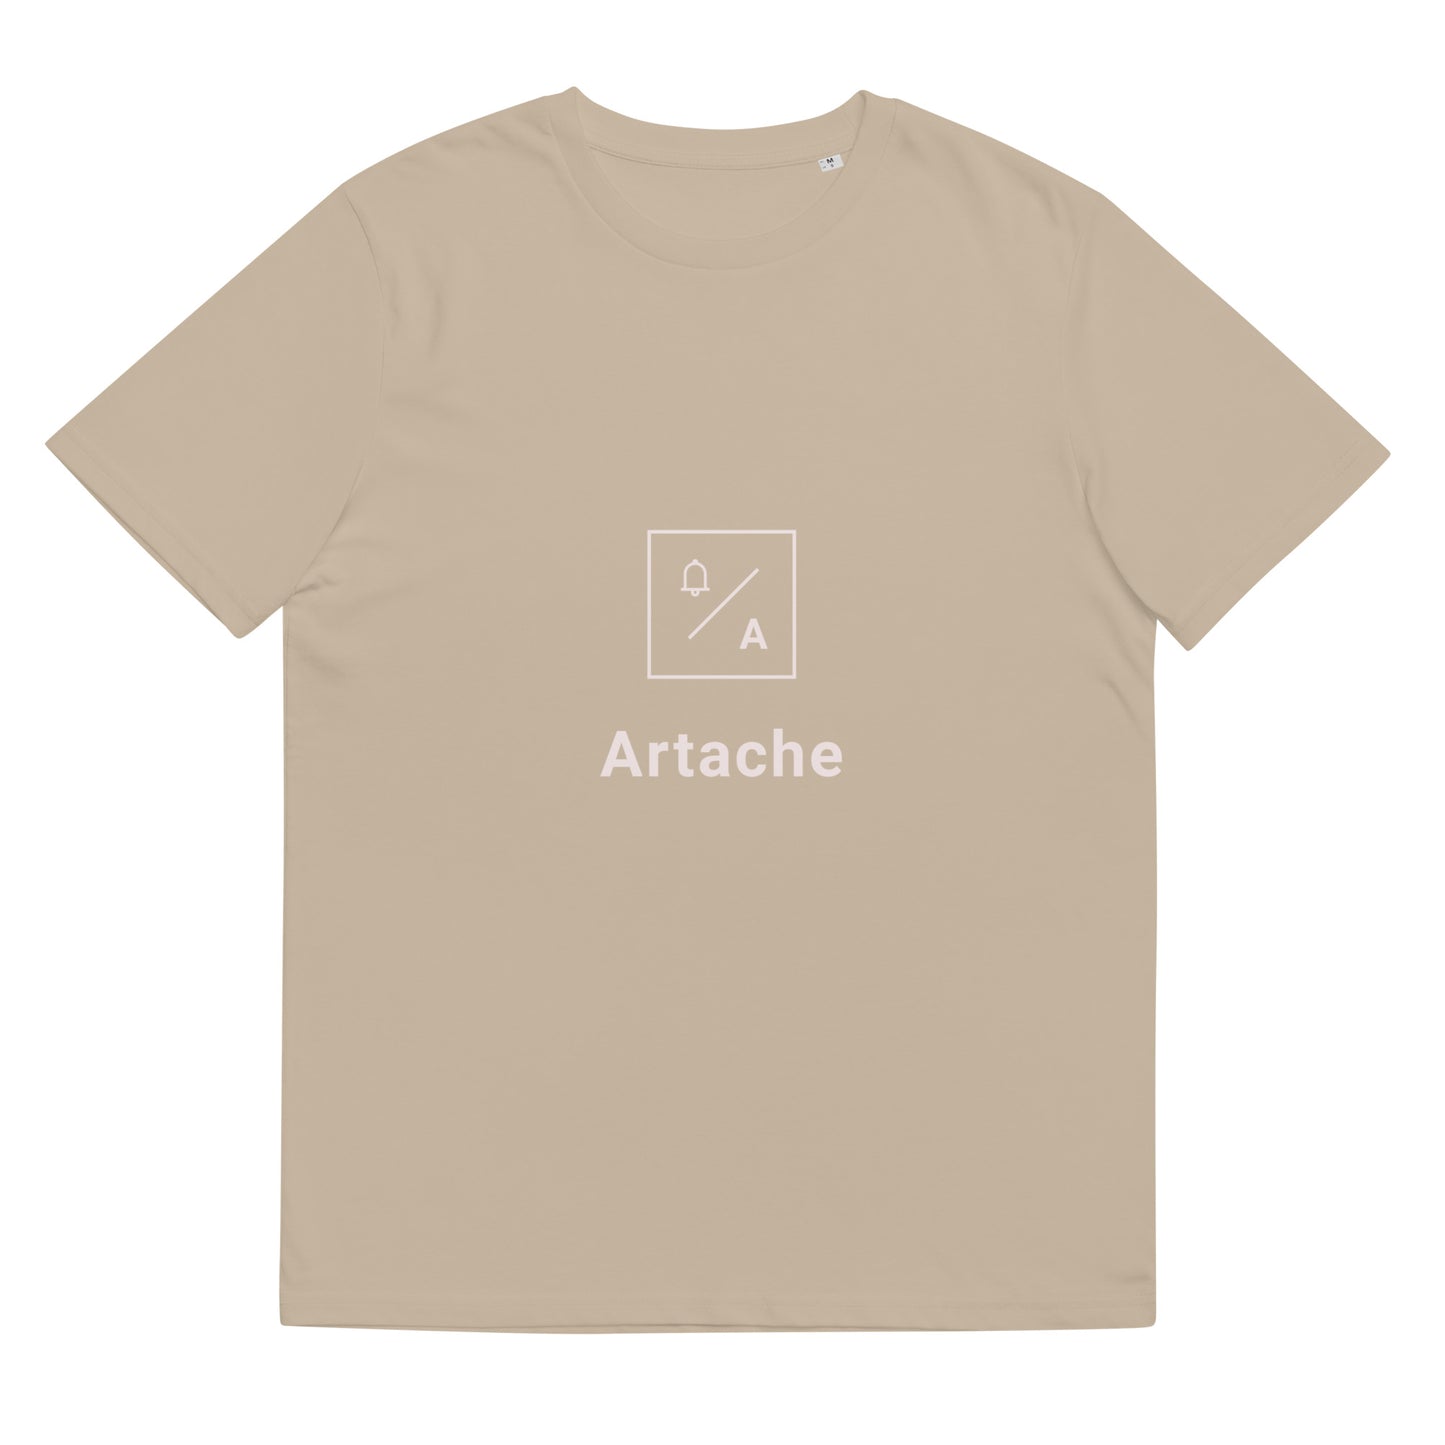 Artache's Unisex organic cotton t-shirt